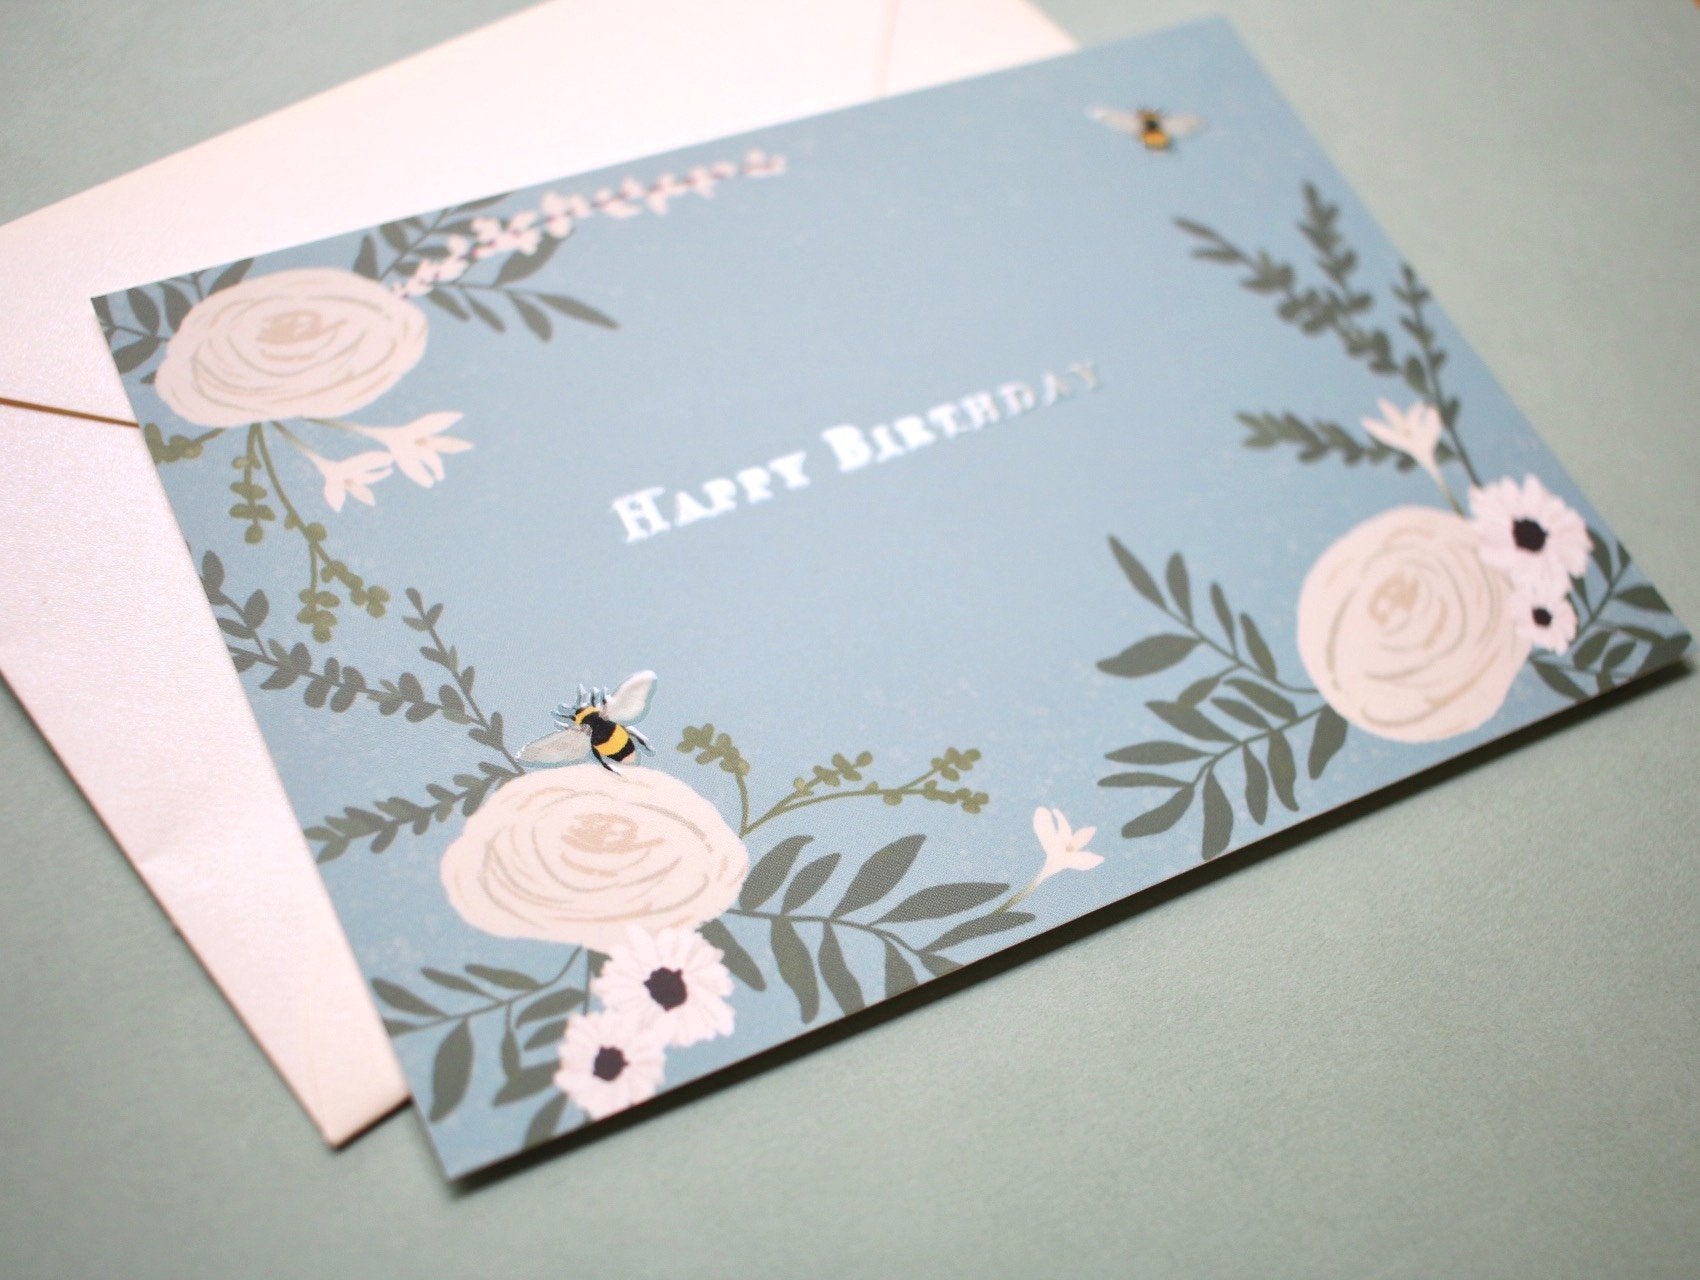 Birthday Flowers Card Greeting Cards - Honeypress Design